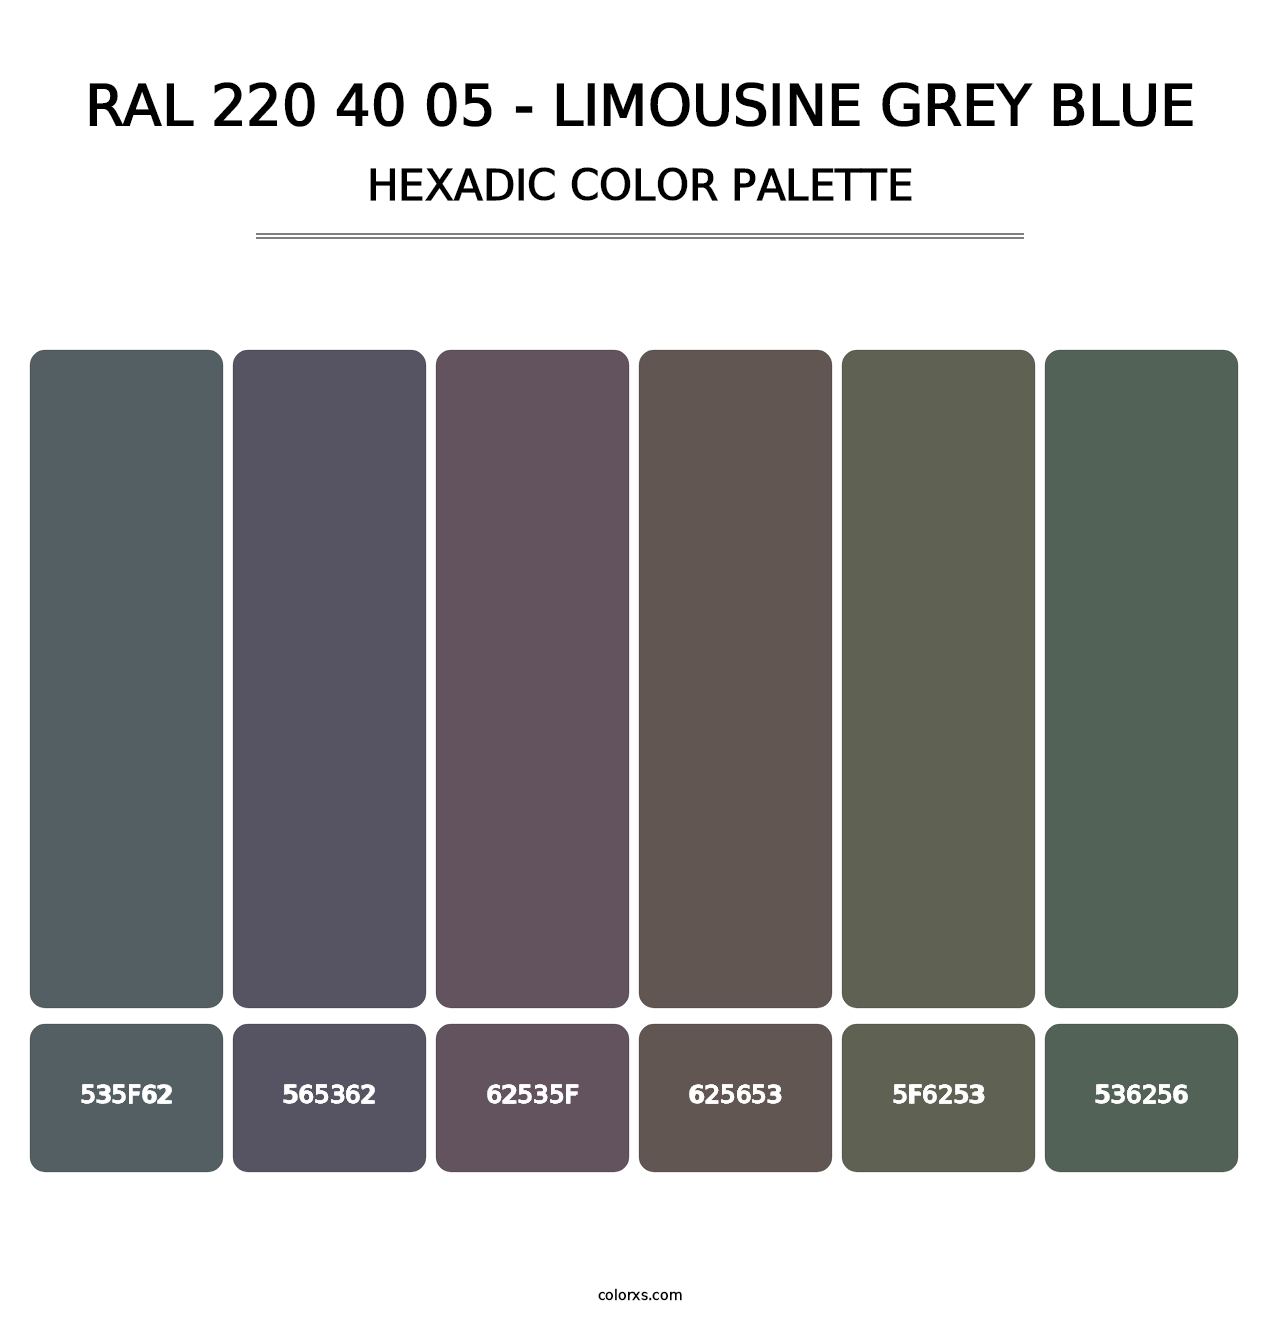 RAL 220 40 05 - Limousine Grey Blue - Hexadic Color Palette